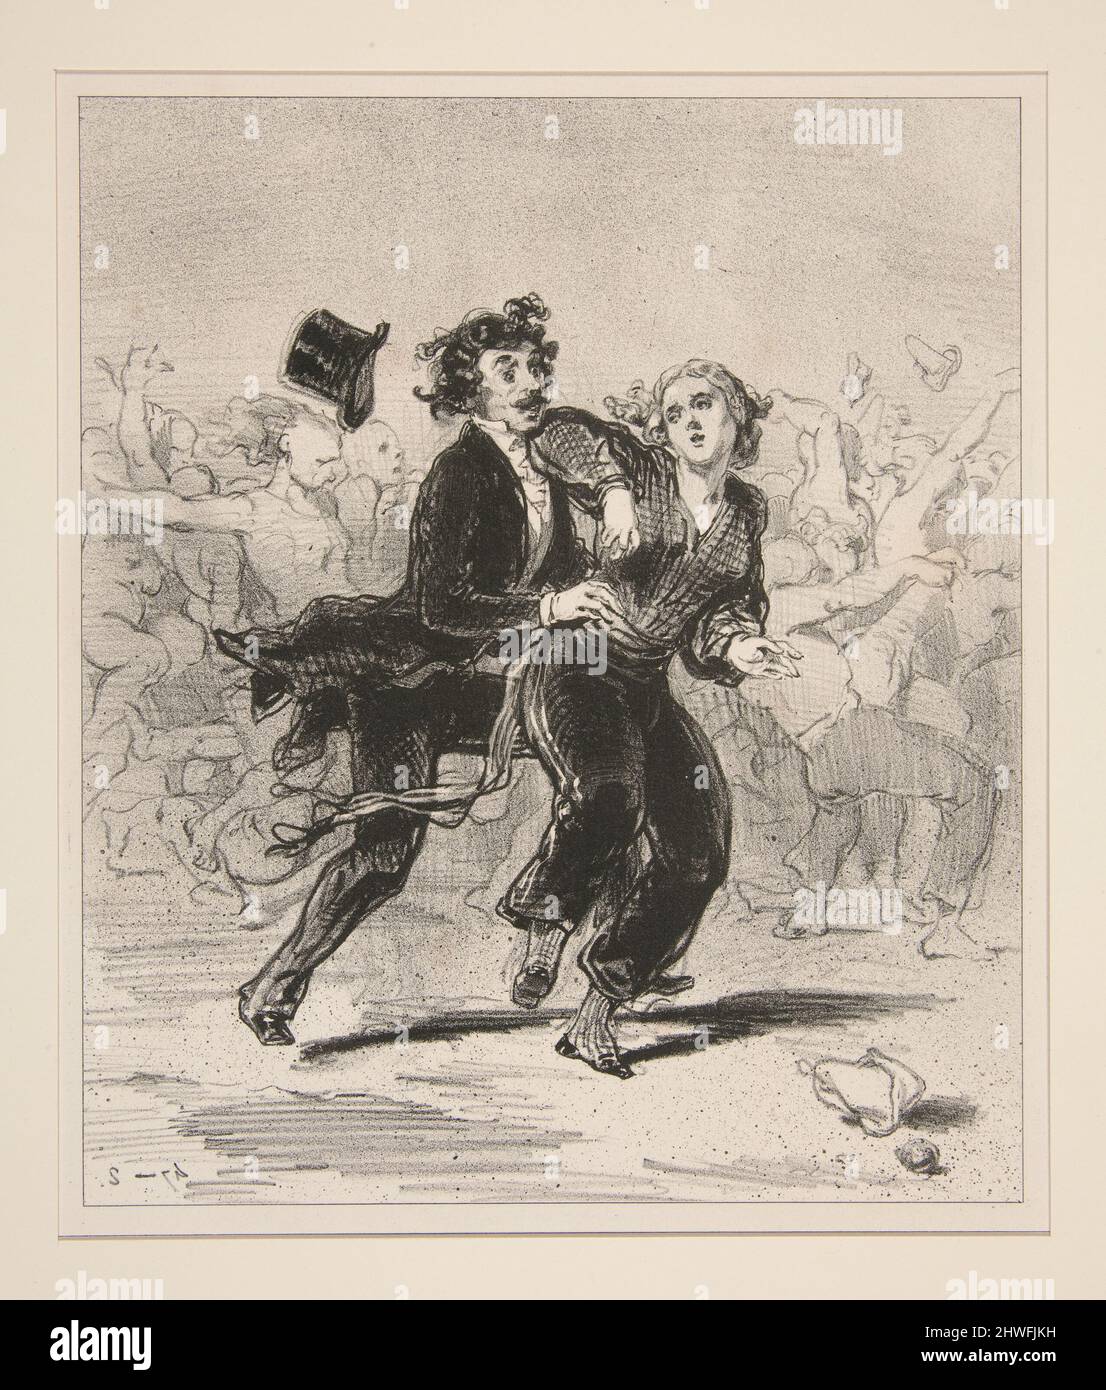 Oh! j’ai une patte sans connaissance! Künstler: Paul Gavarni, Französisch, 1804–1866 Stockfoto